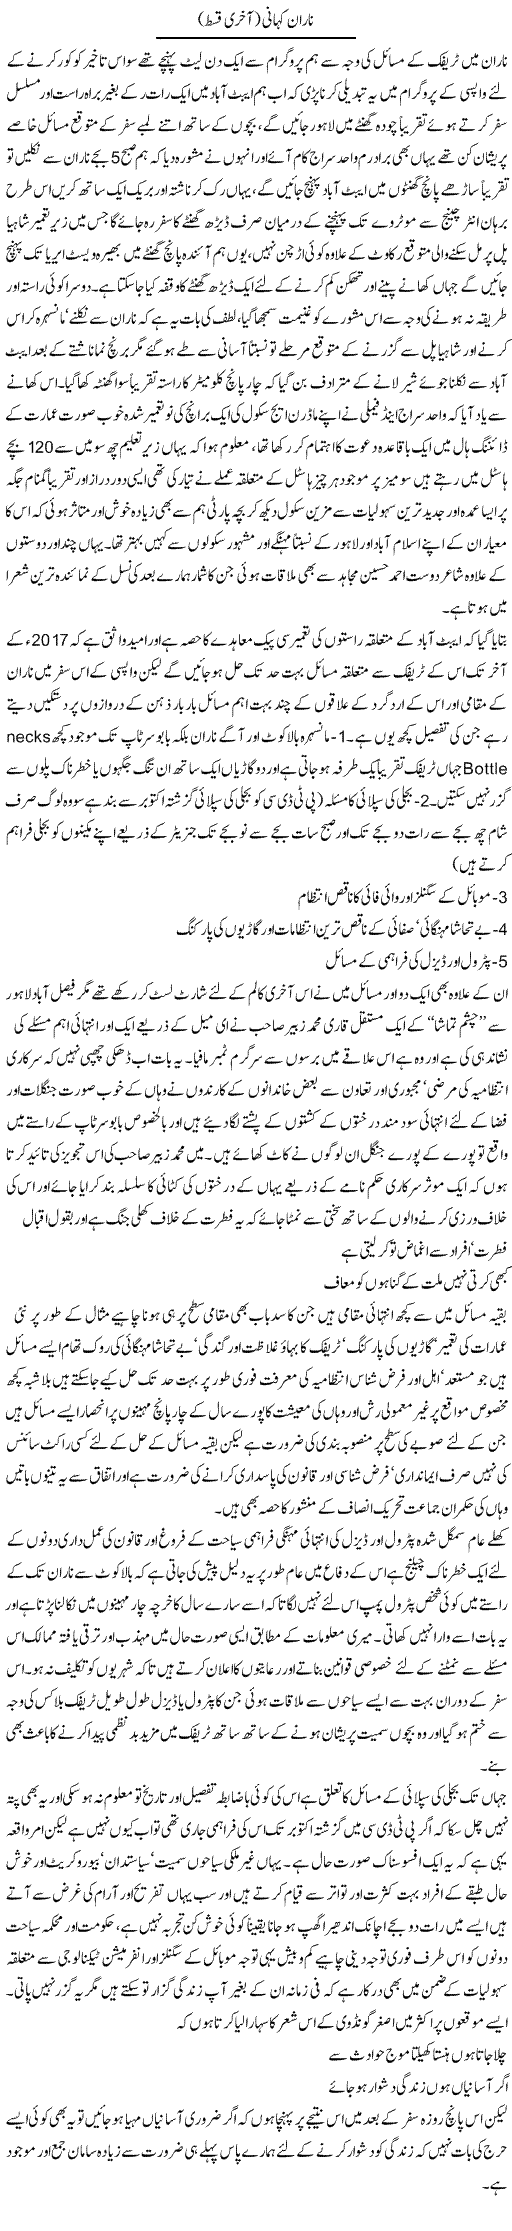 Naran kahani (2) | Amjad Islam Amjad | Daily Urdu Columns